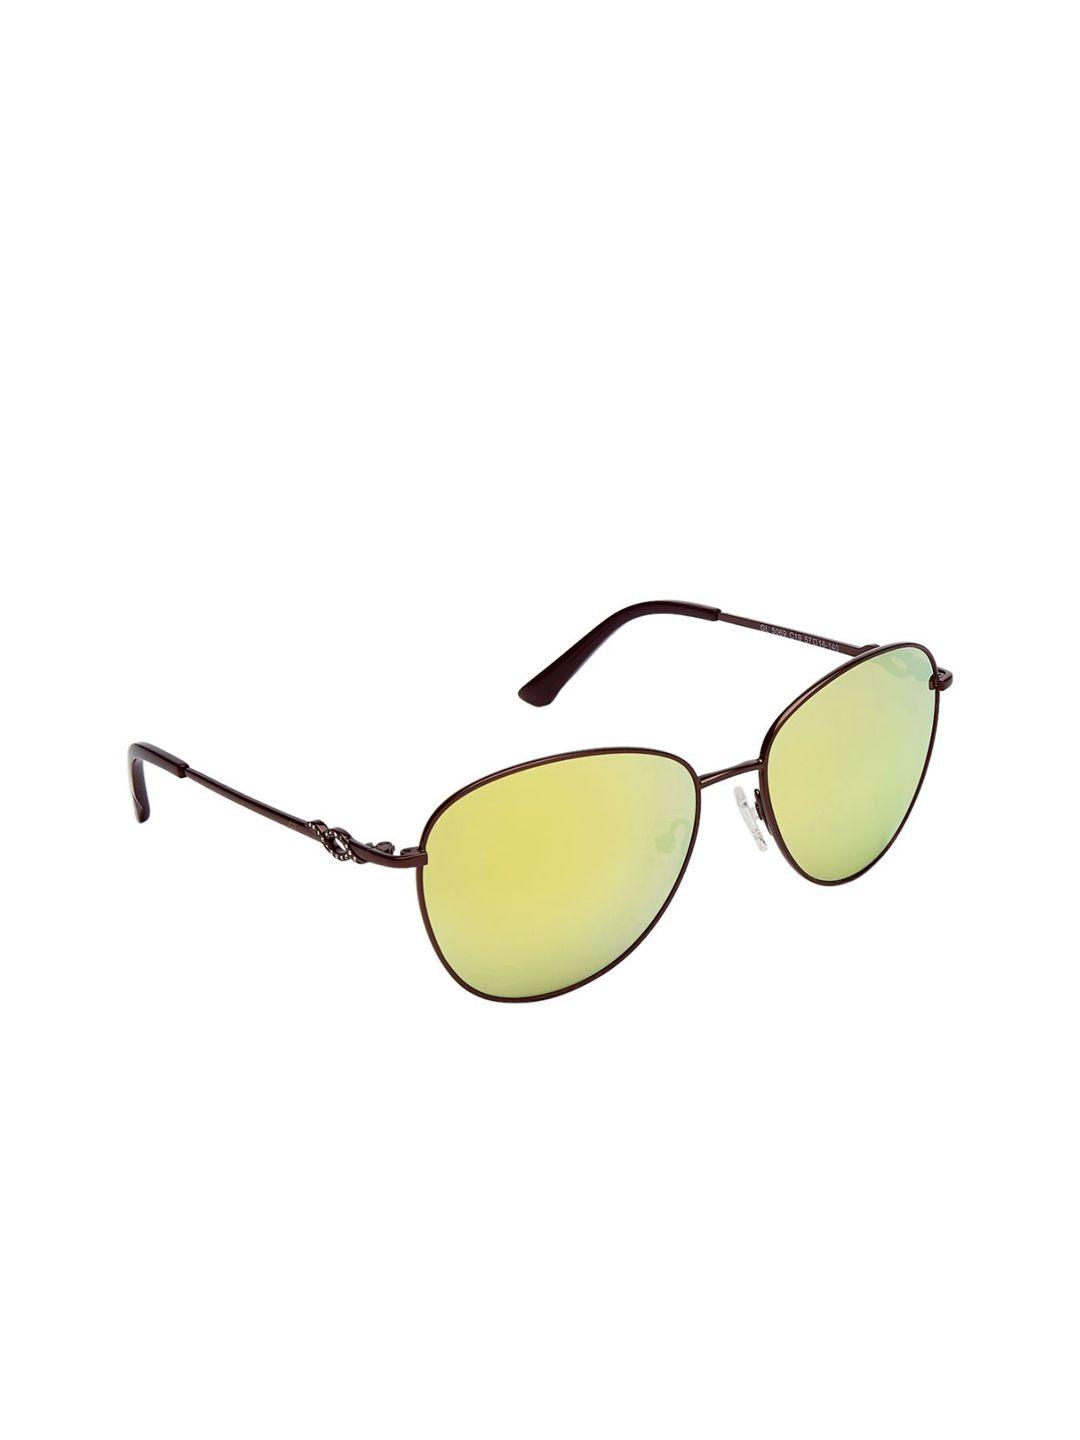 gio collection women gold-toned aviator sunglasses gl5069c19